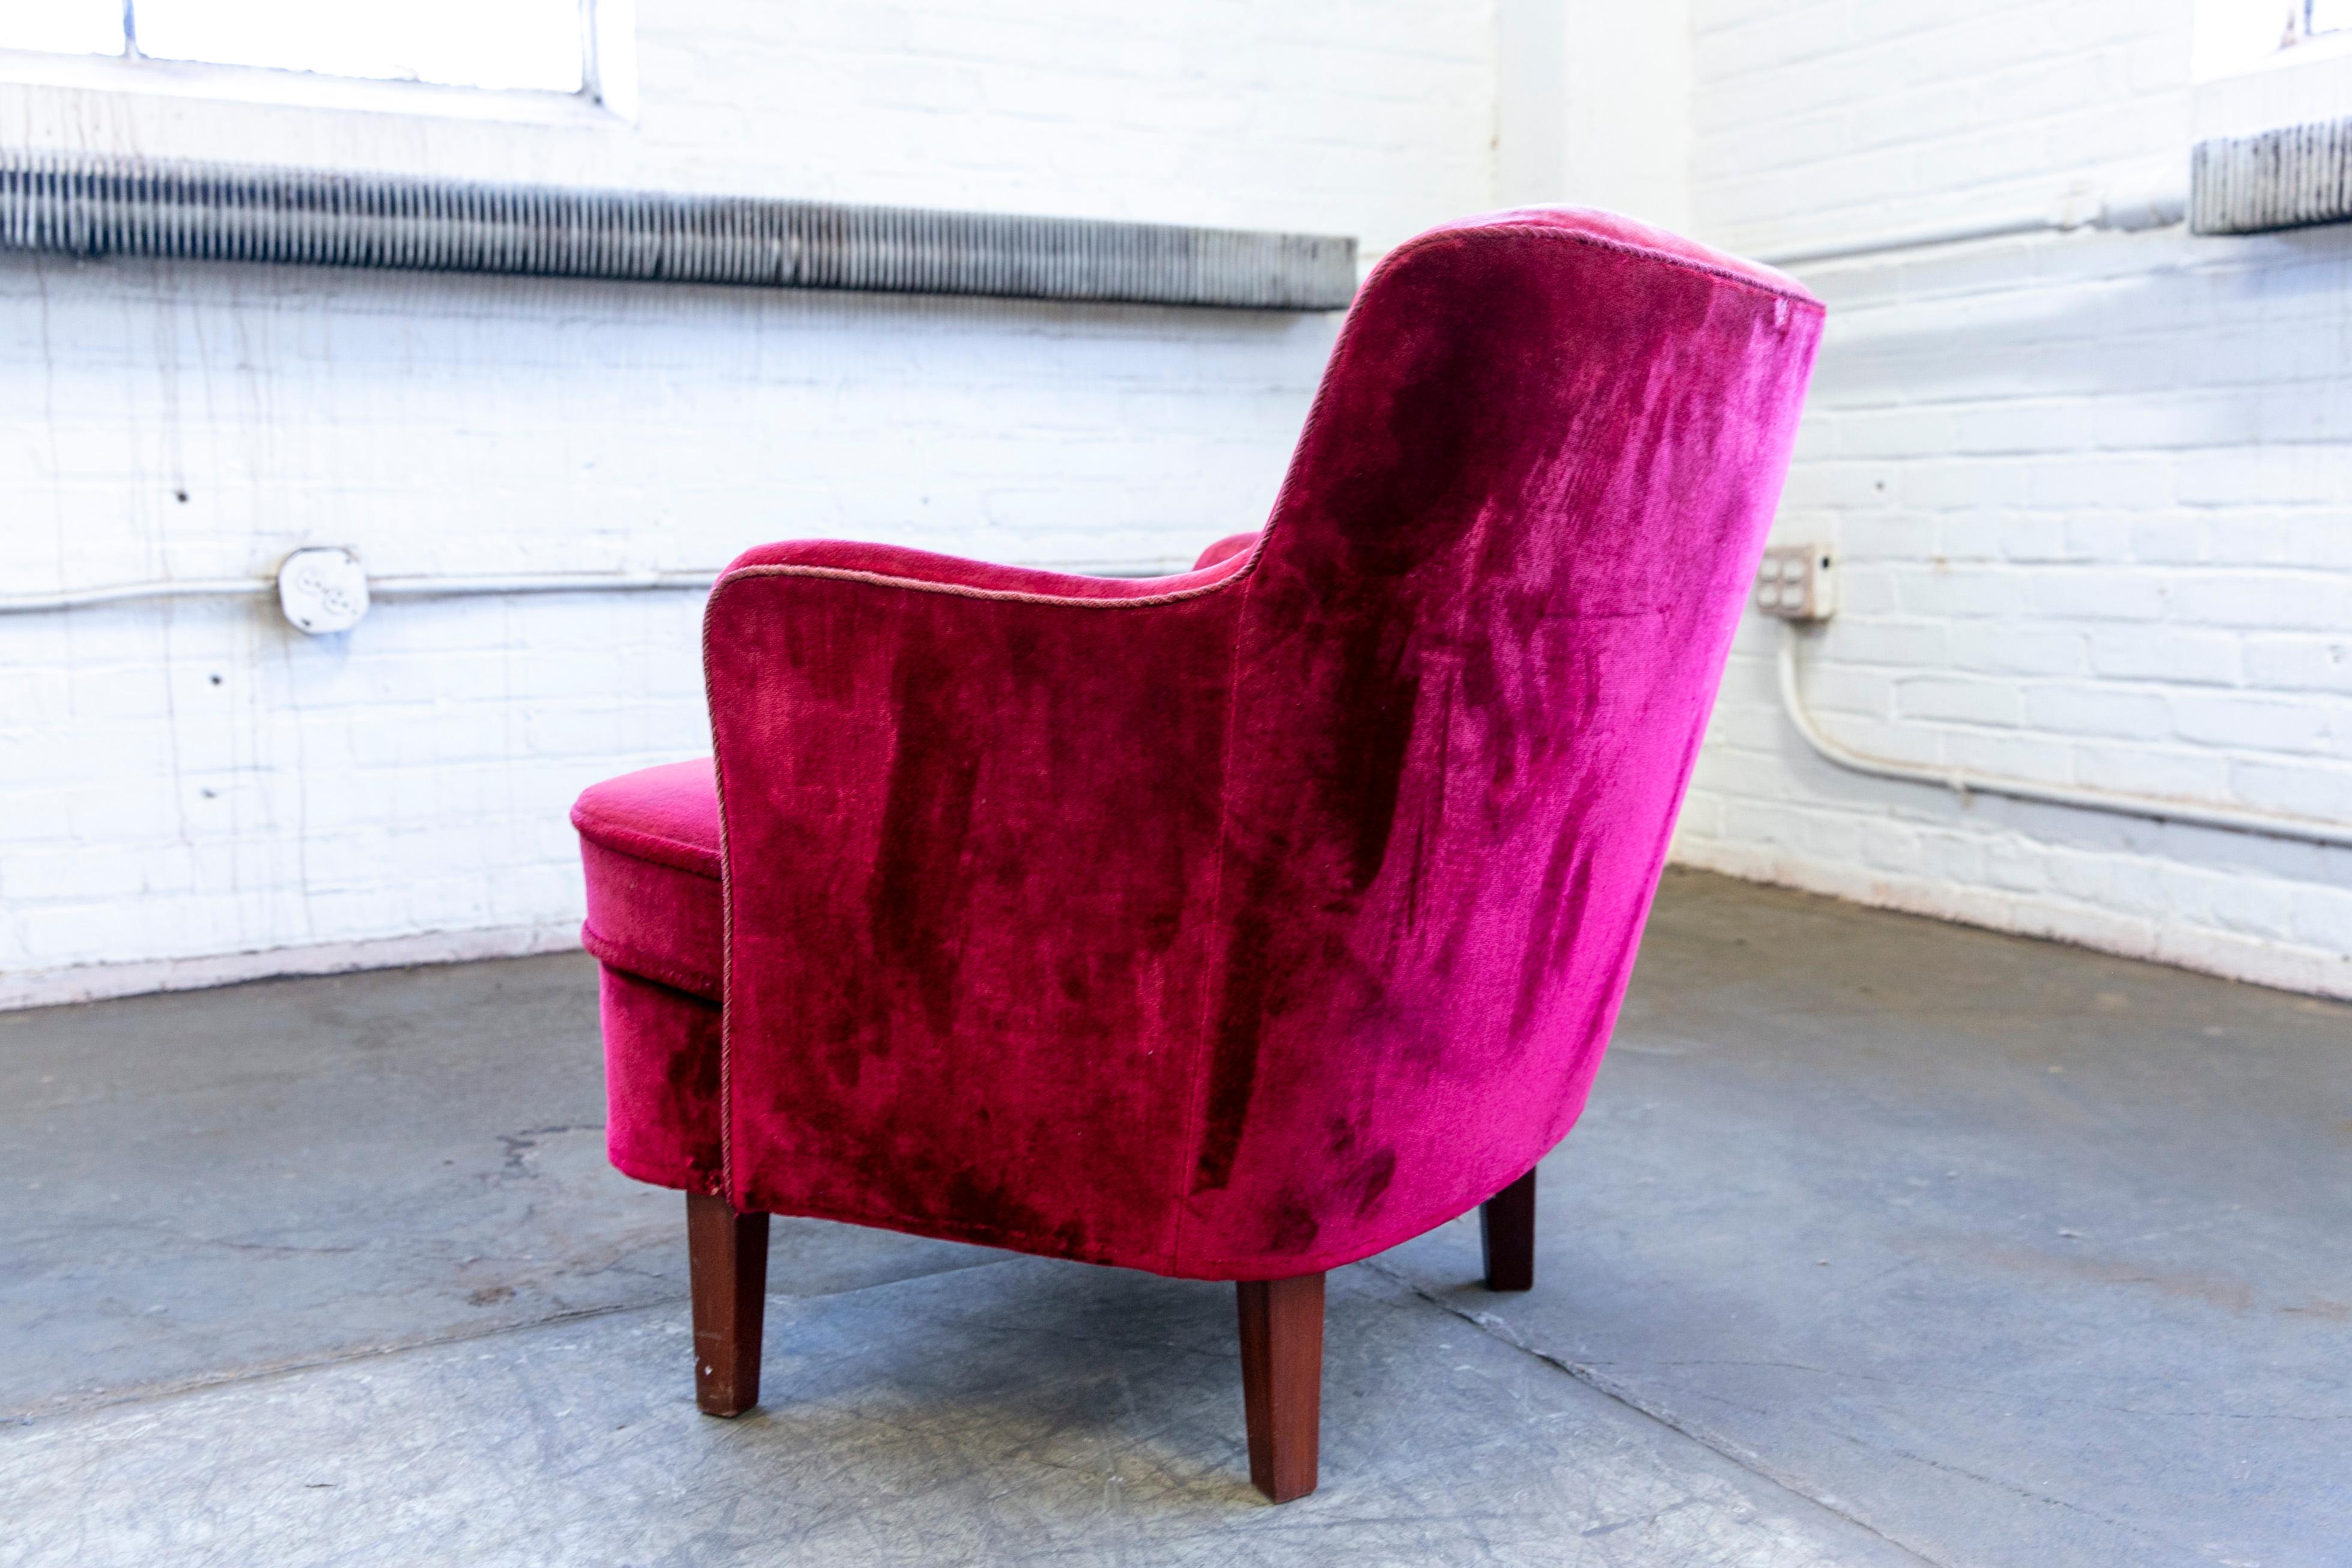 Peter Hvidt Orla Molgaard Style Classic Danish 1950s Lounge Chair 1